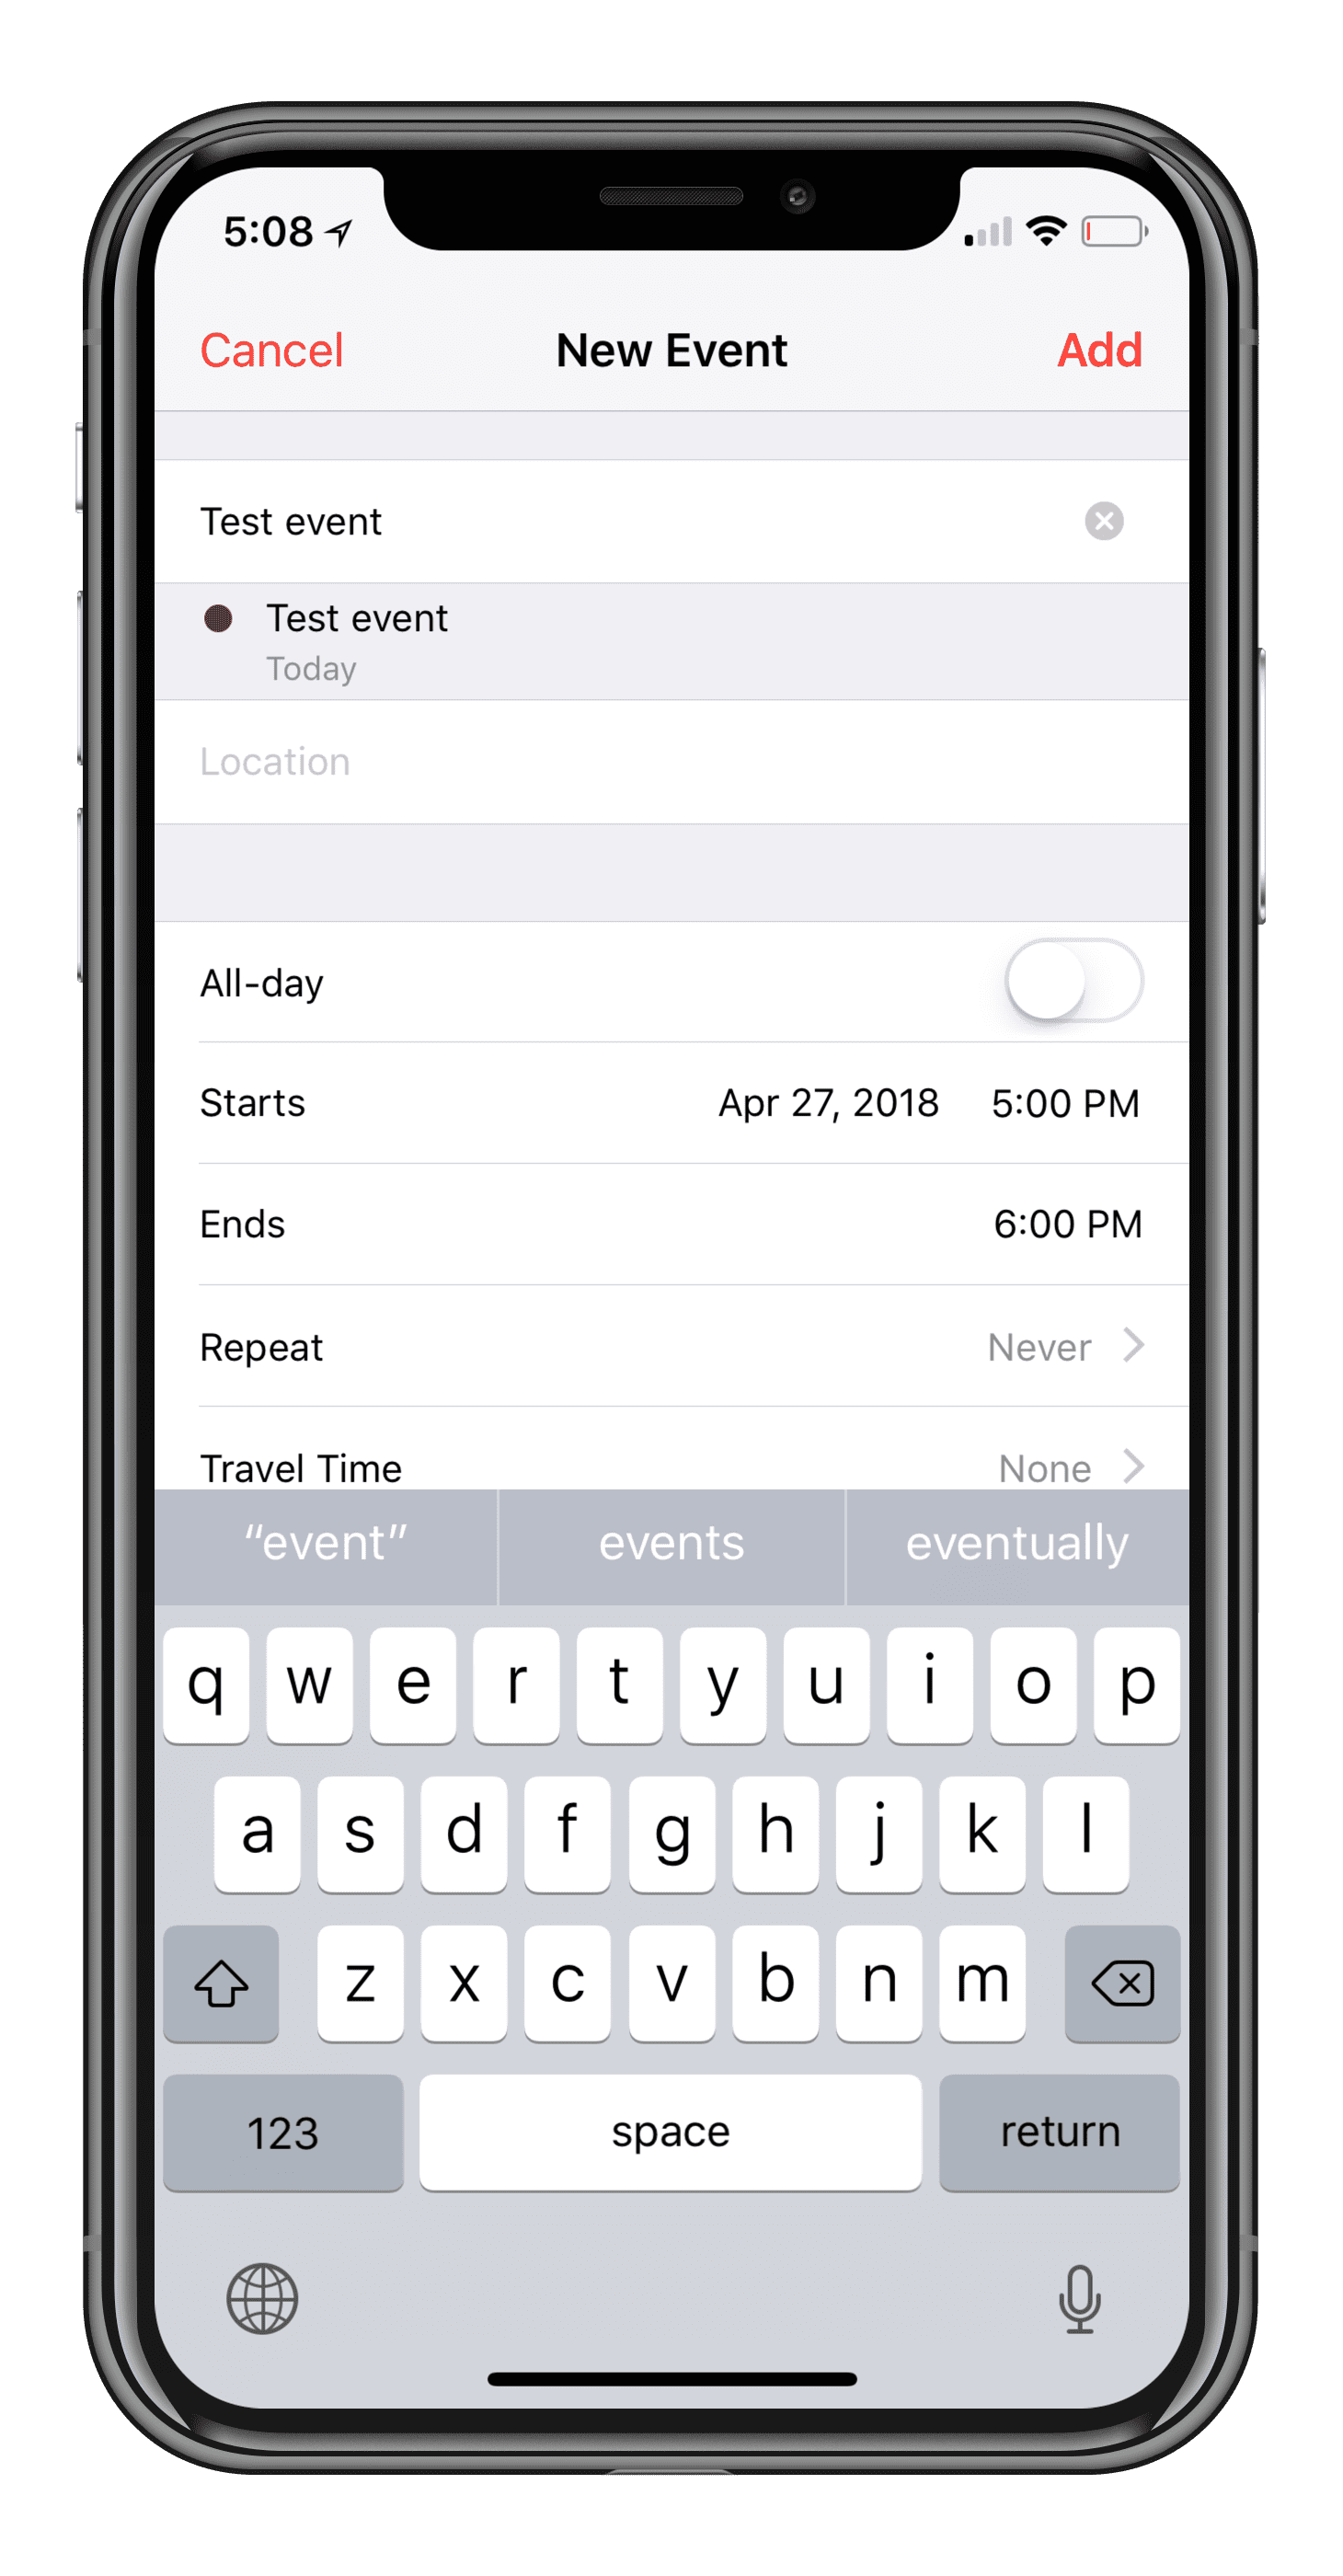 can you connect an ipad calendar app to google calendar